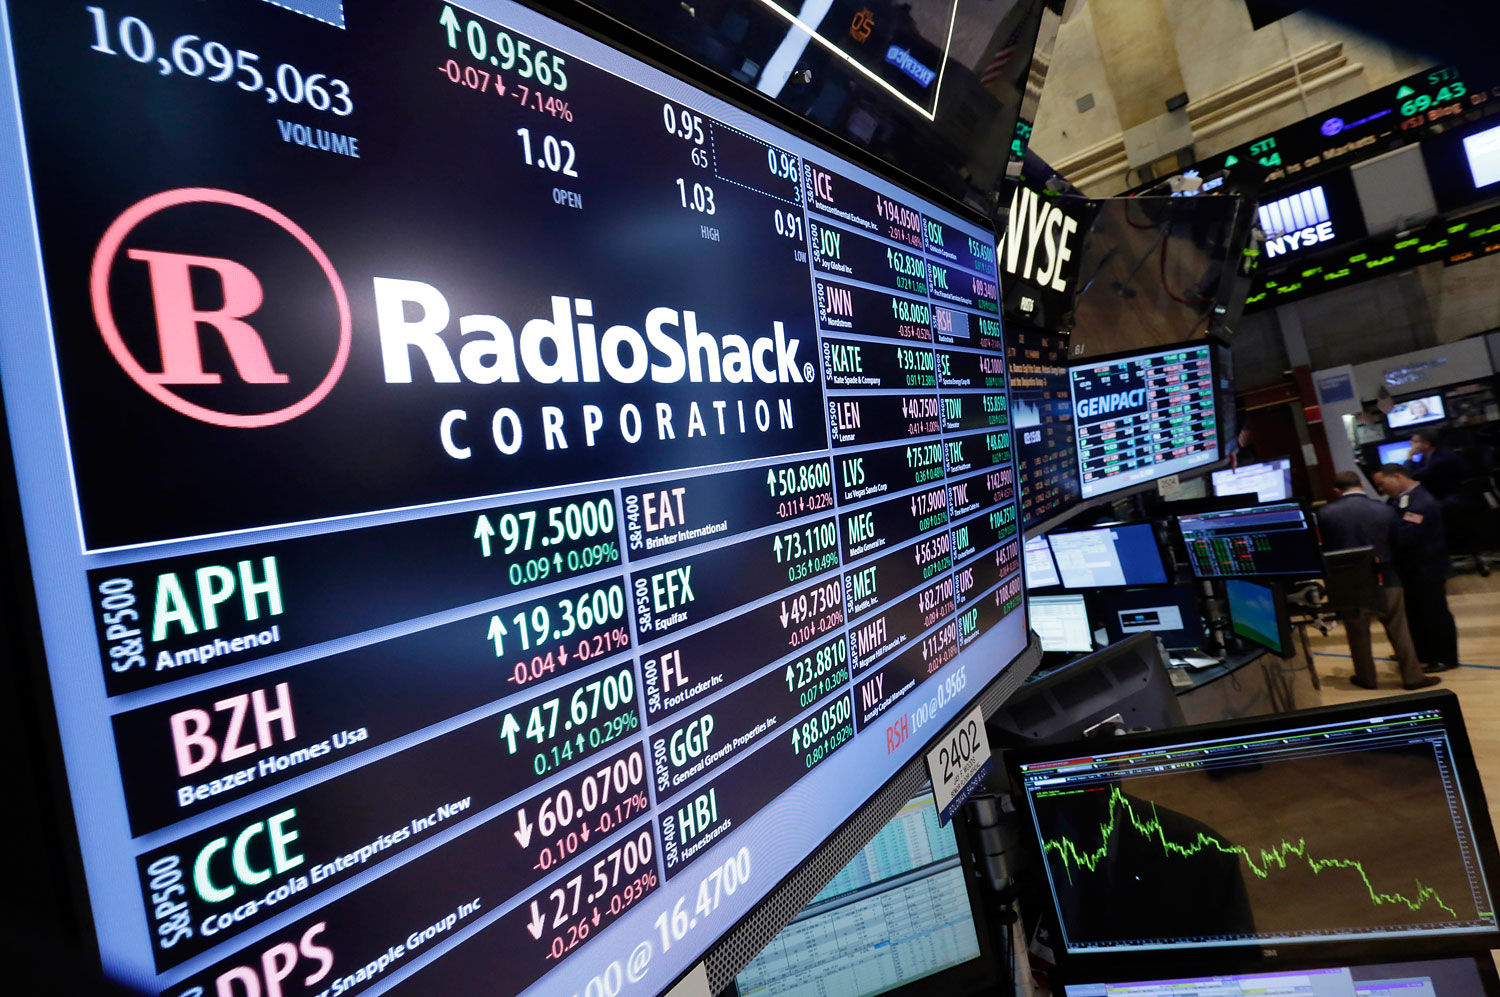 Traders work on the floor of the New York Stock Exchange near the post that handles Radio Shack, June 20, 2014. (Richard Drew—AP)